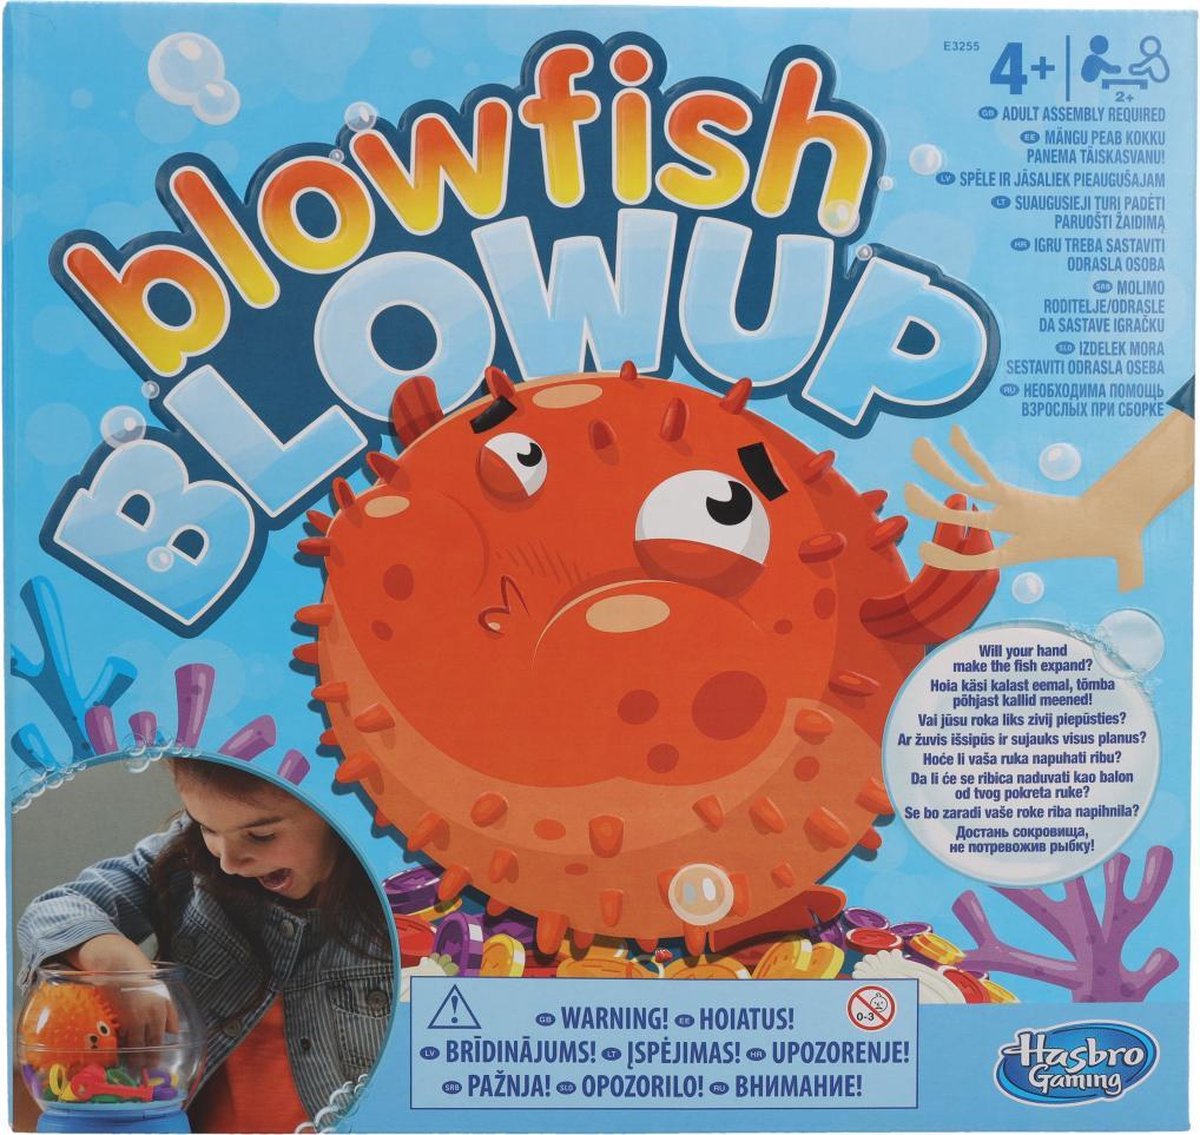   Blowup Blowfish Game